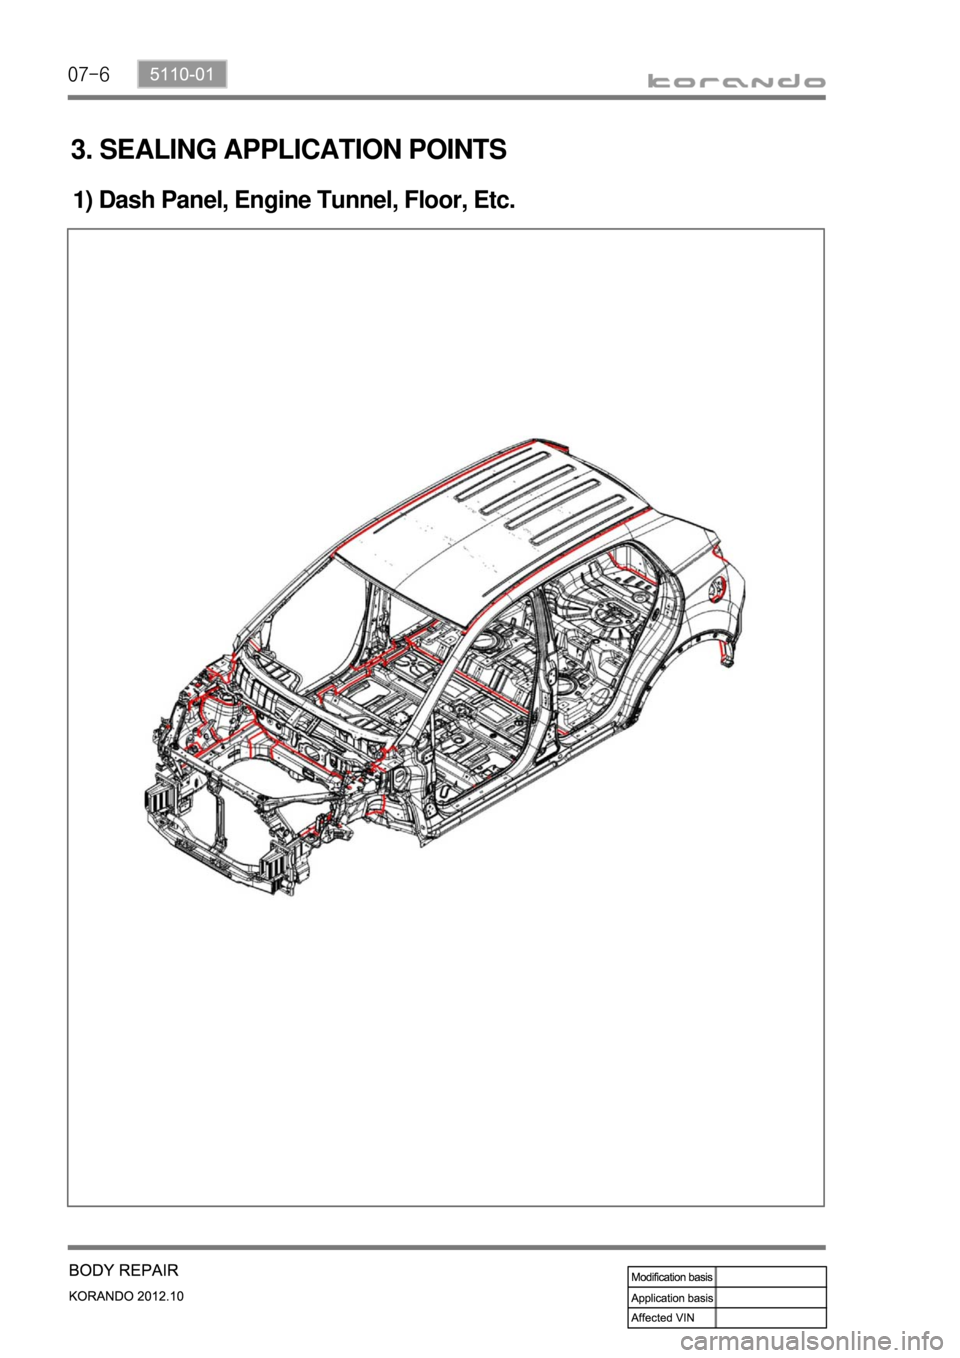 SSANGYONG KORANDO 2012  Service Manual 07-6
3. SEALING APPLICATION POINTS
1) Dash Panel, Engine Tunnel, Floor, Etc. 